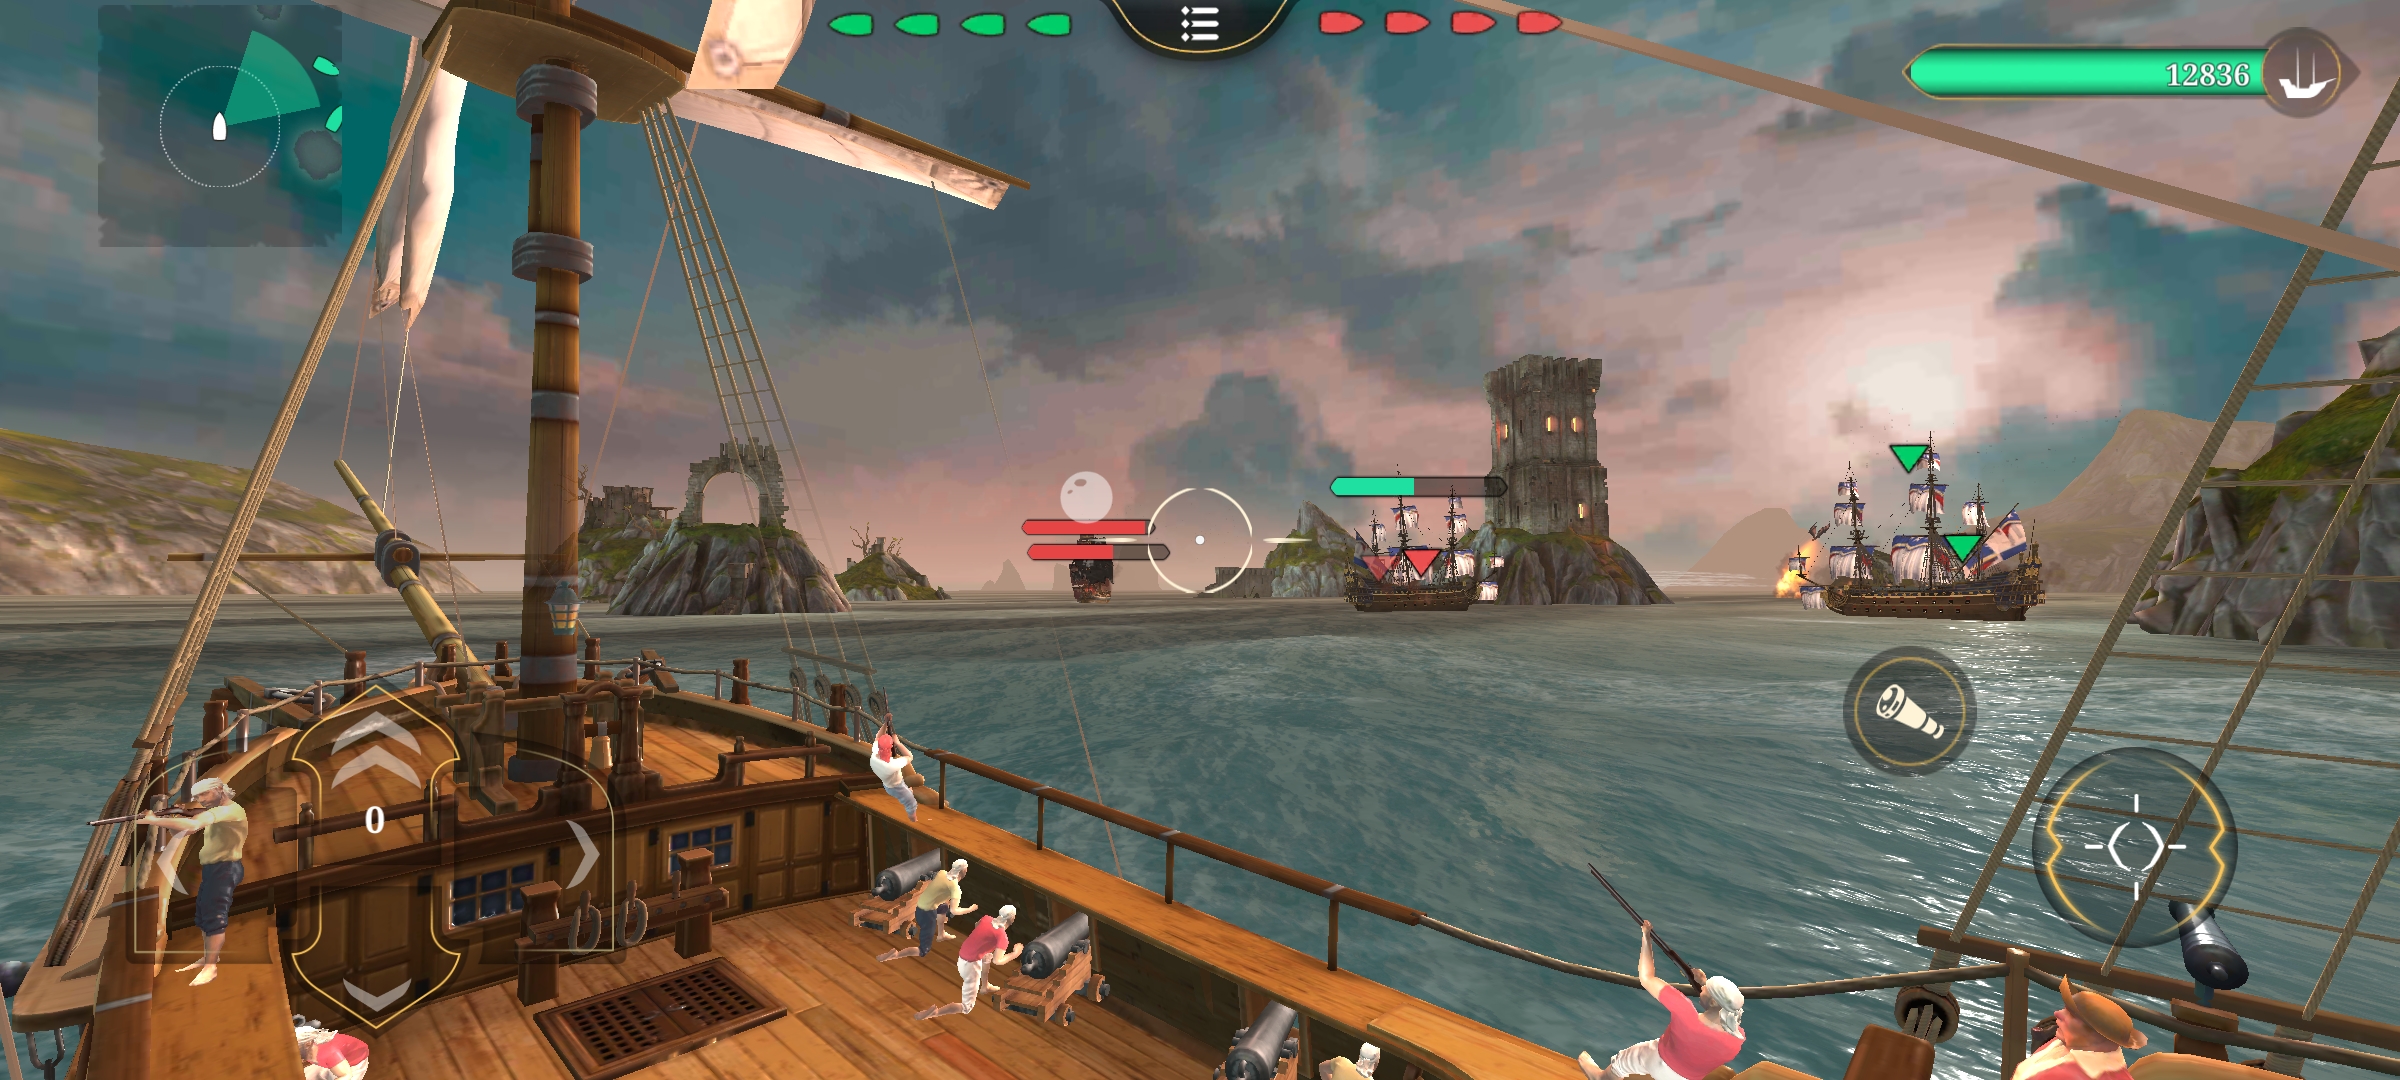 [Game Android] Dragon Sails: Battleship War